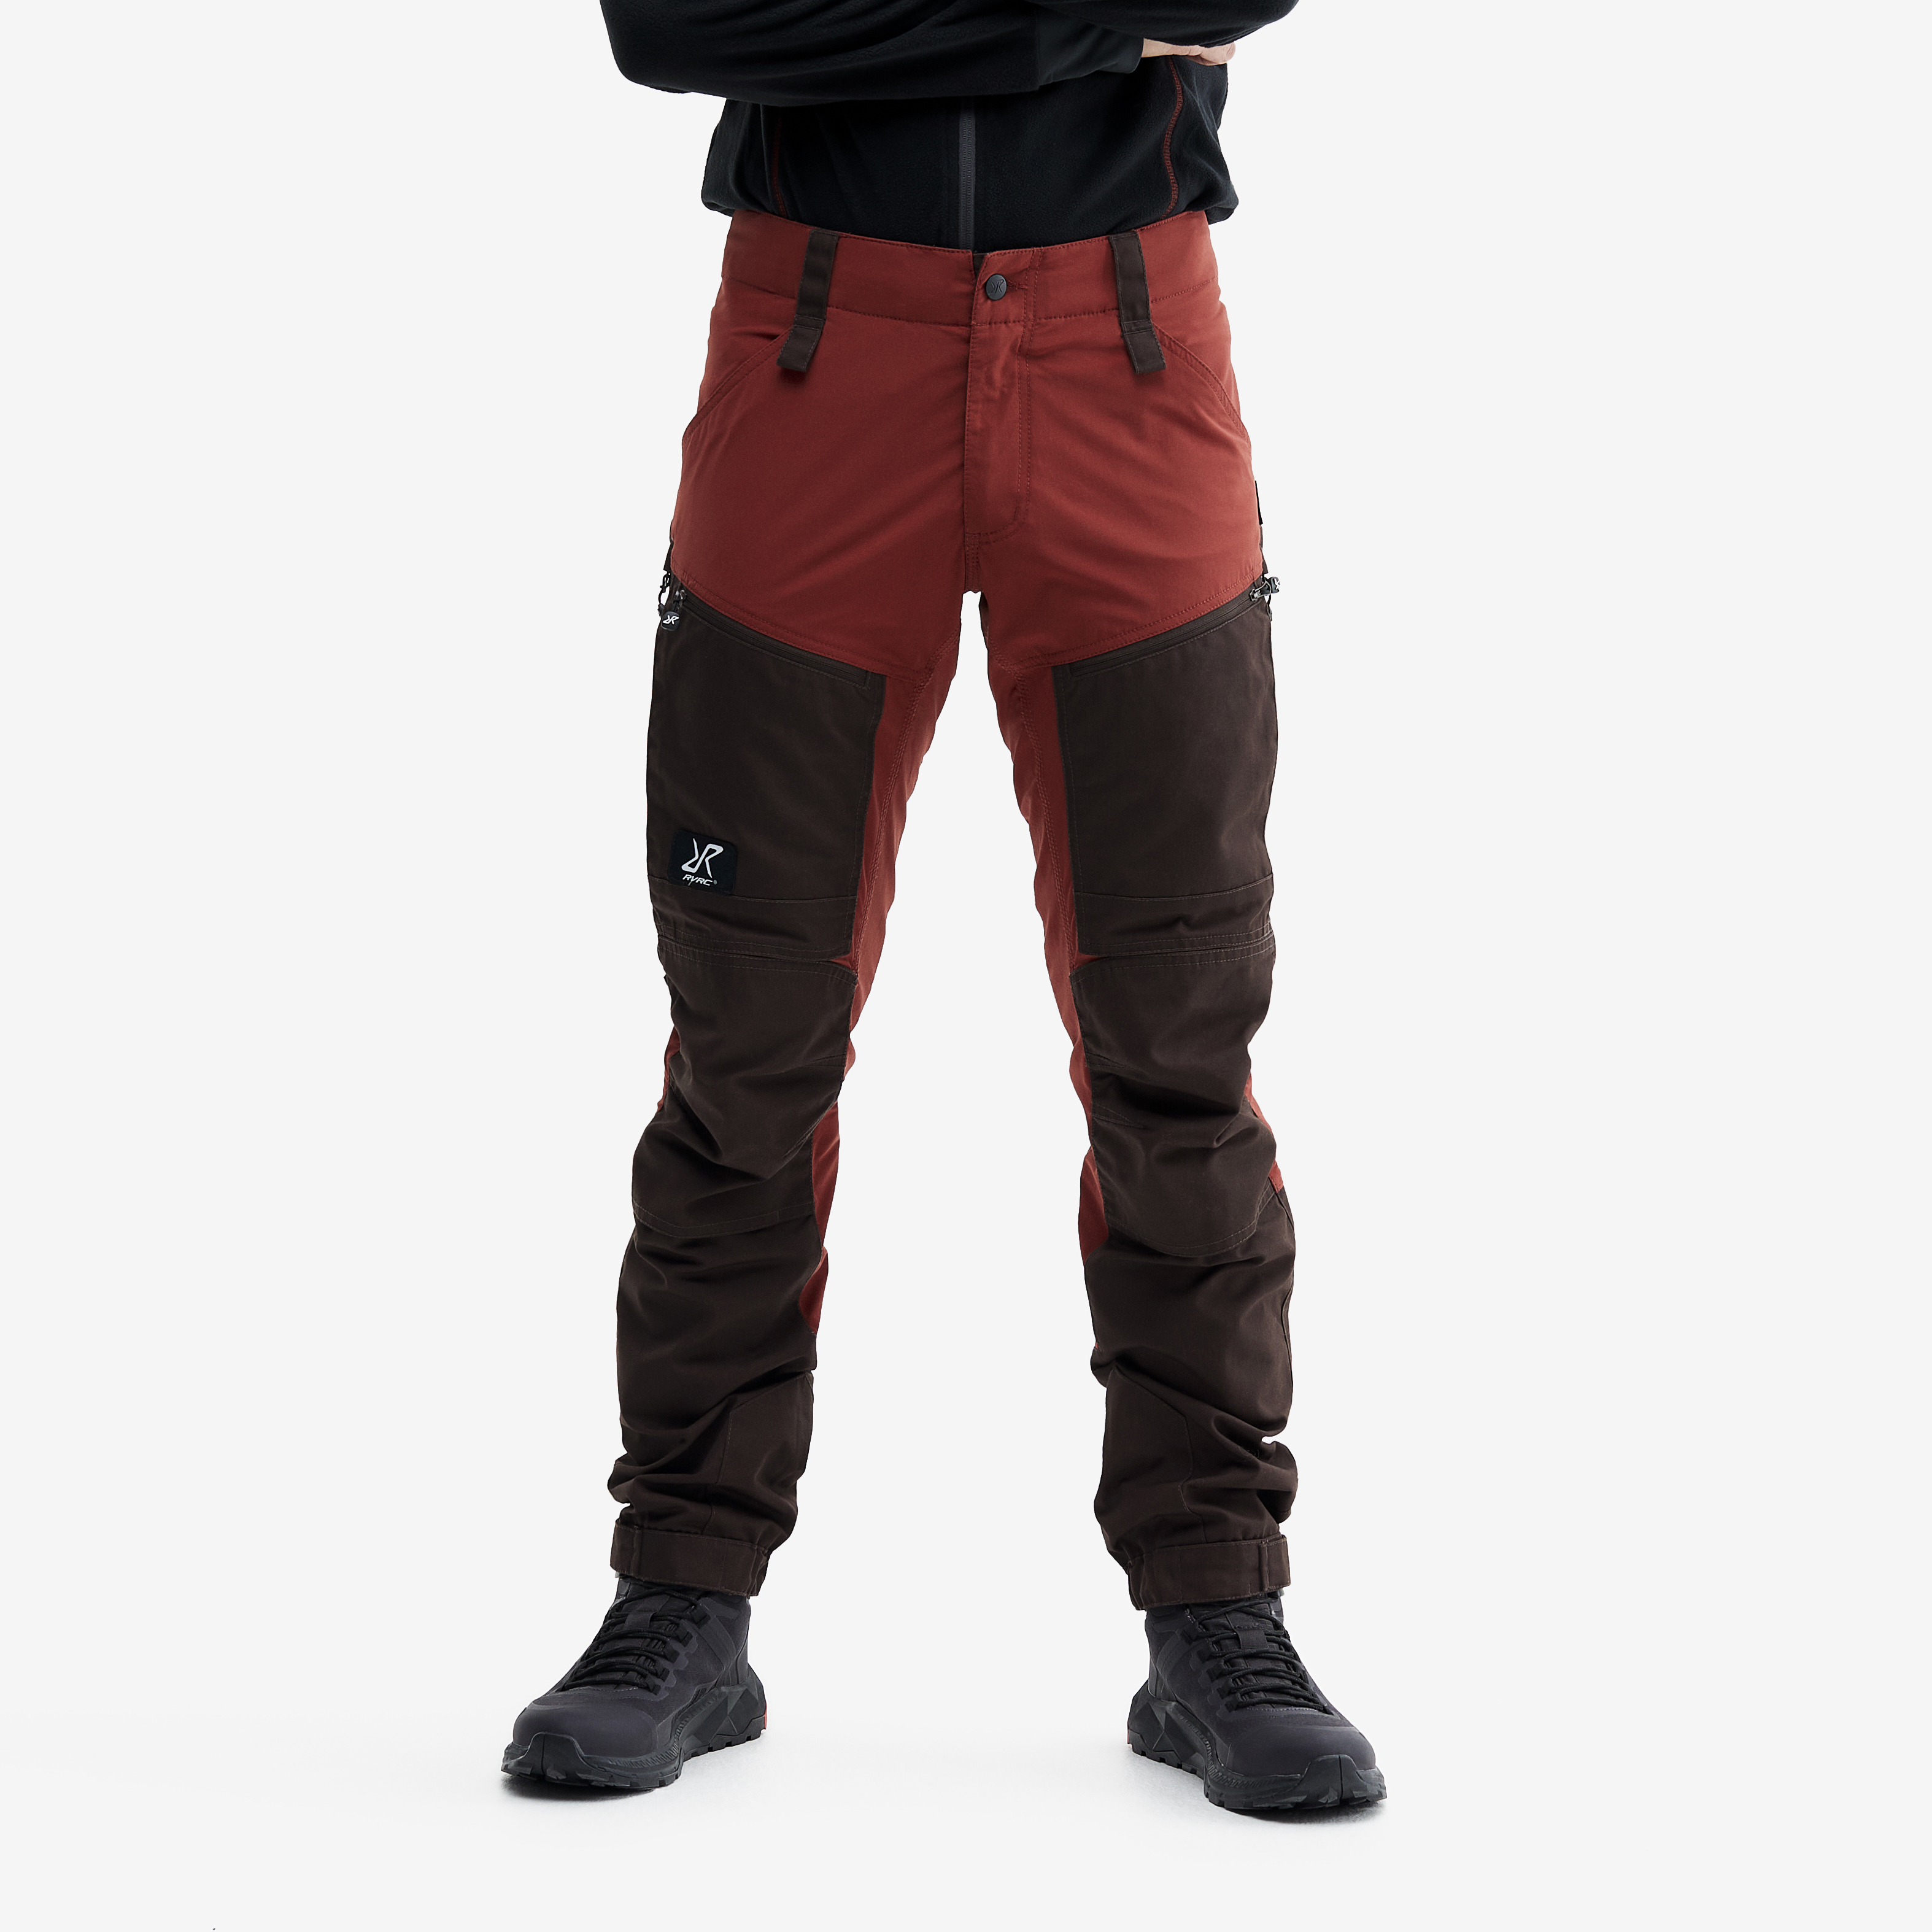 Pantaloni trekking RVRC GP Pro da uomo in marrone